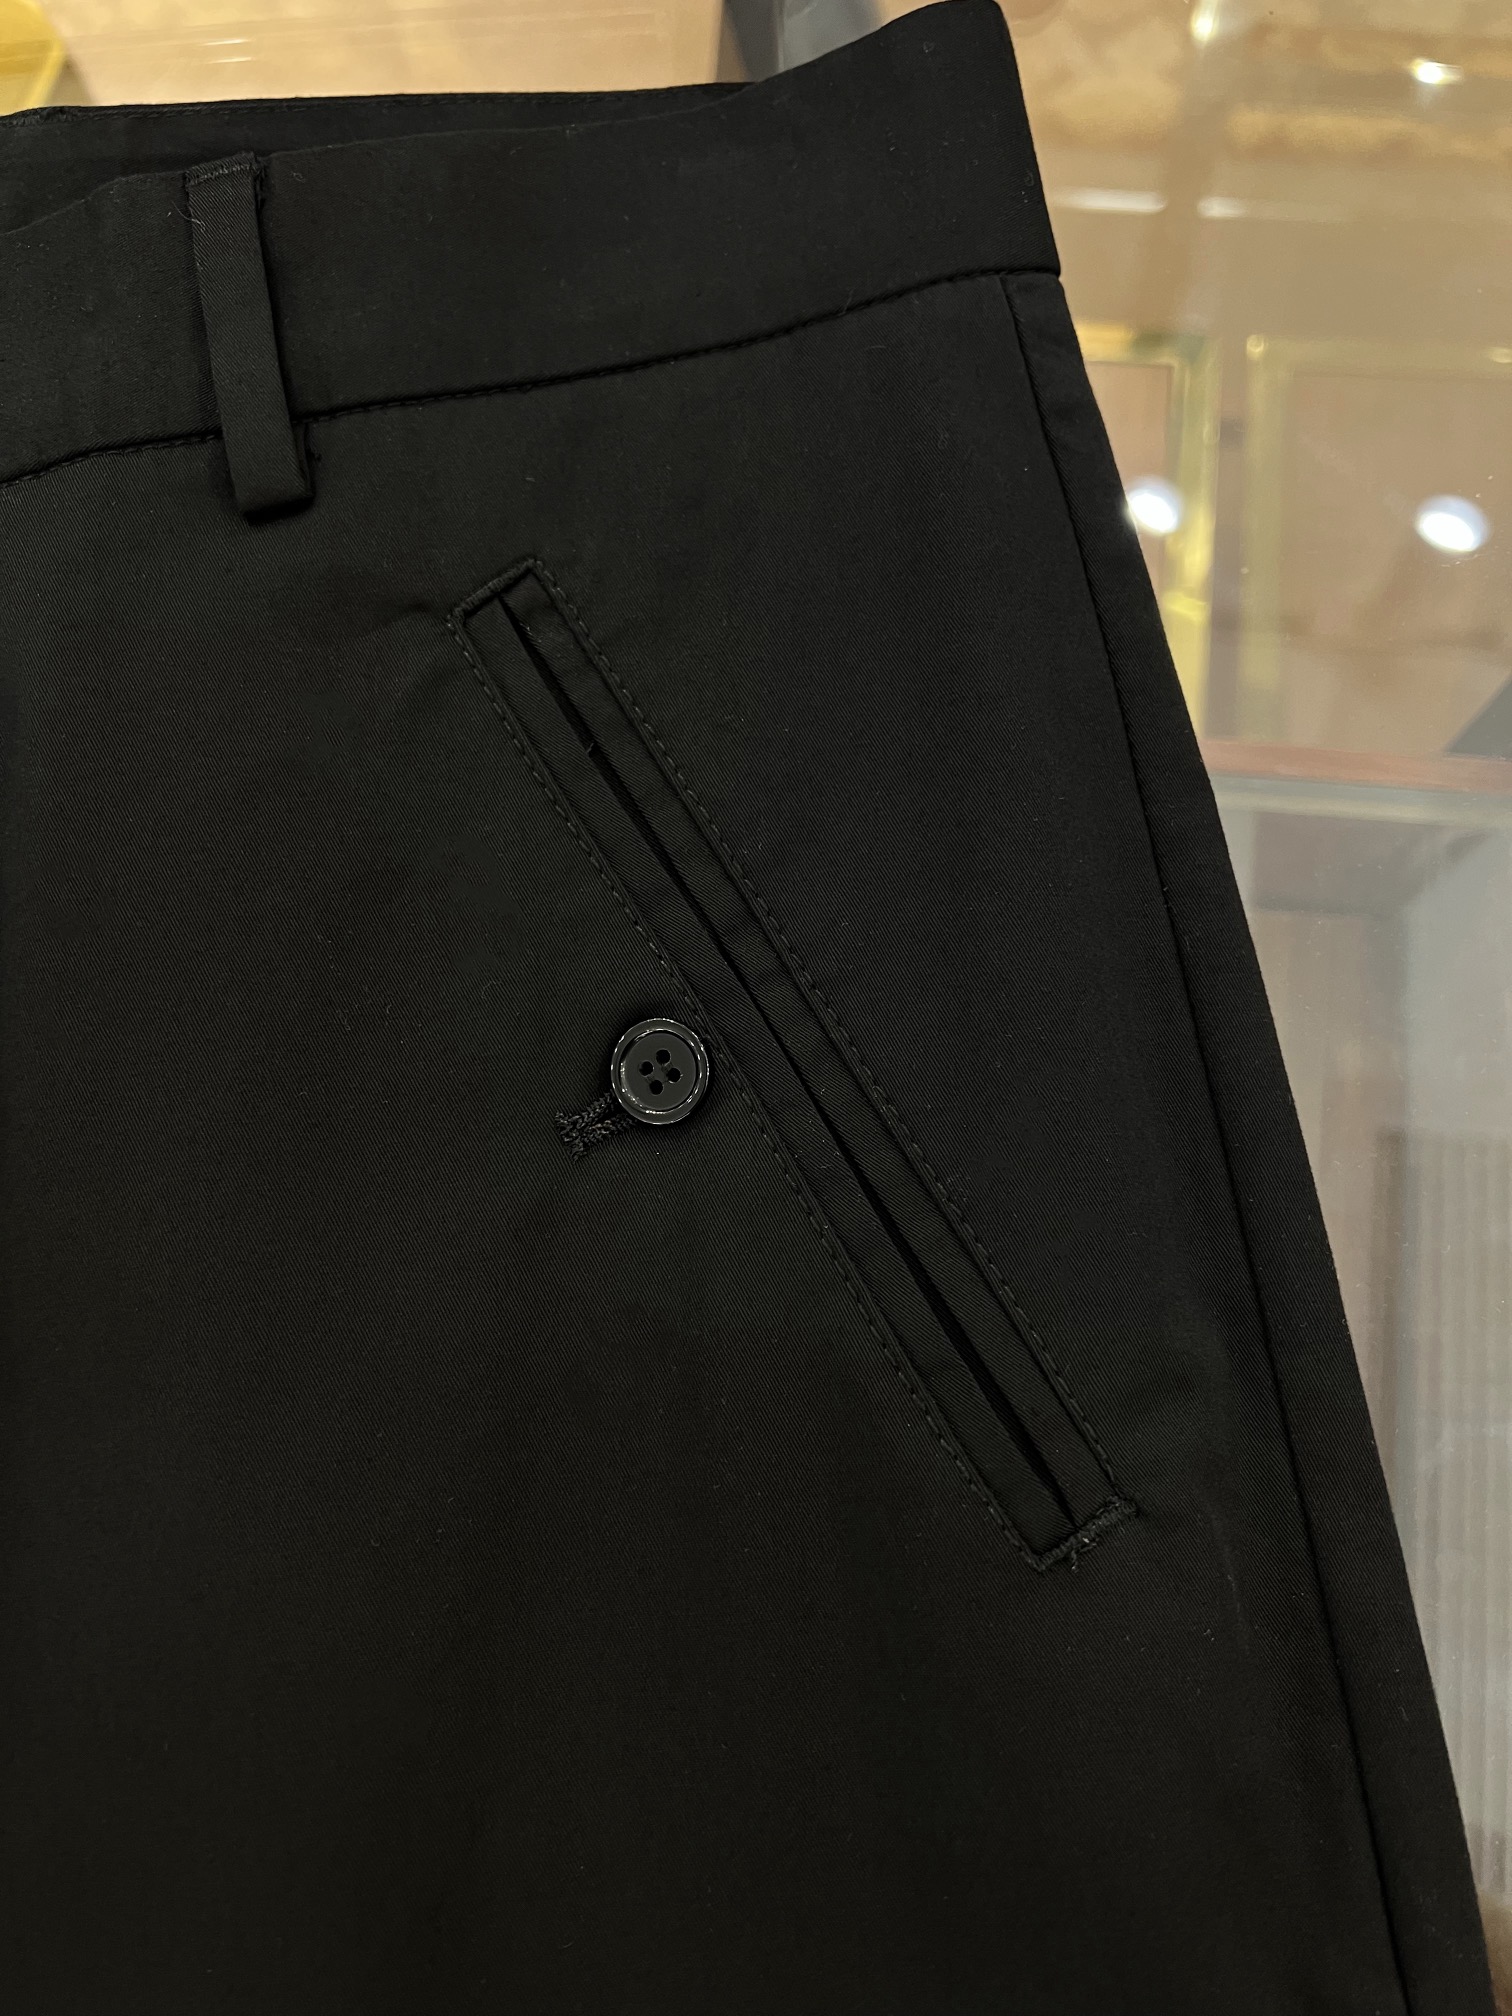 SS新款休闲九分裤顶级皮牌logo棉质弹力面料个性拉链设计上身有型完美细节修身小脚裤型黑色码数44-52